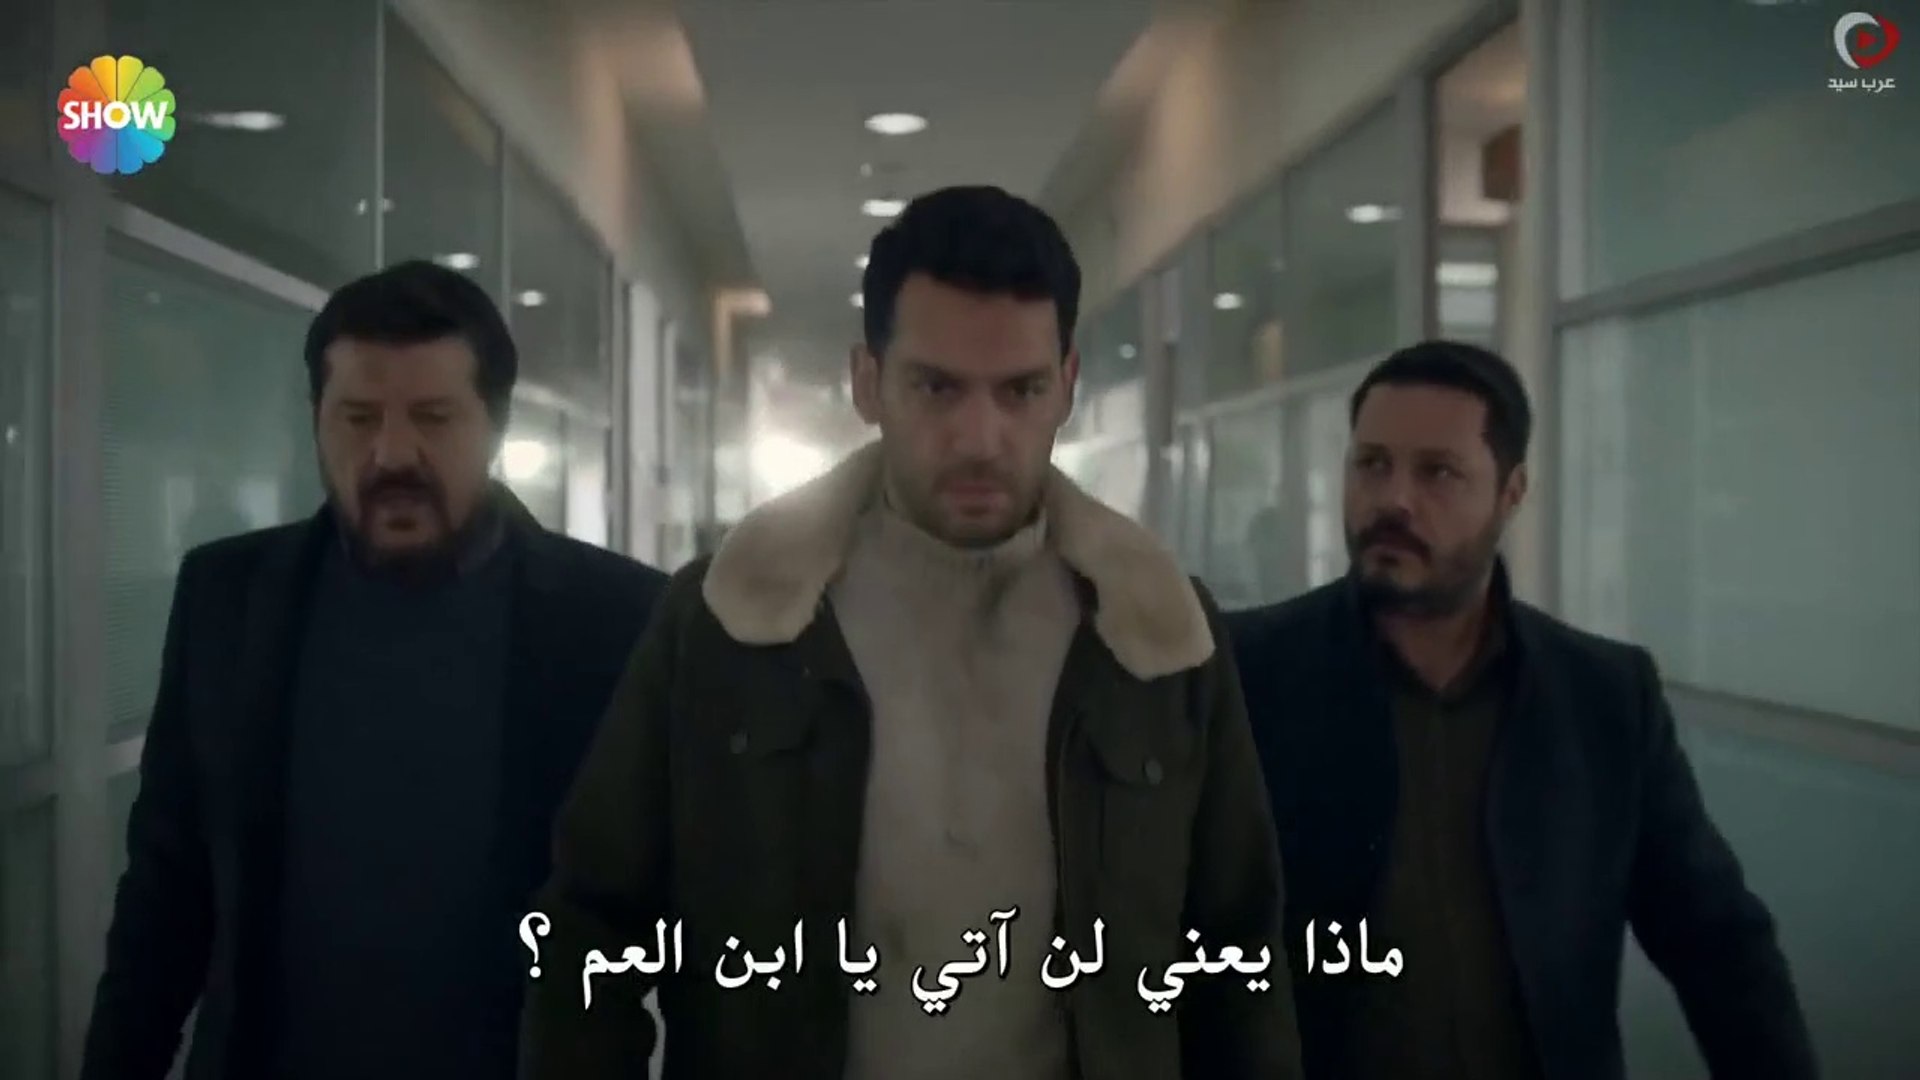 HD مسلسل رامو الحلقة 32 جزء 1 مترجمة للعربية - فيديو Dailymotion